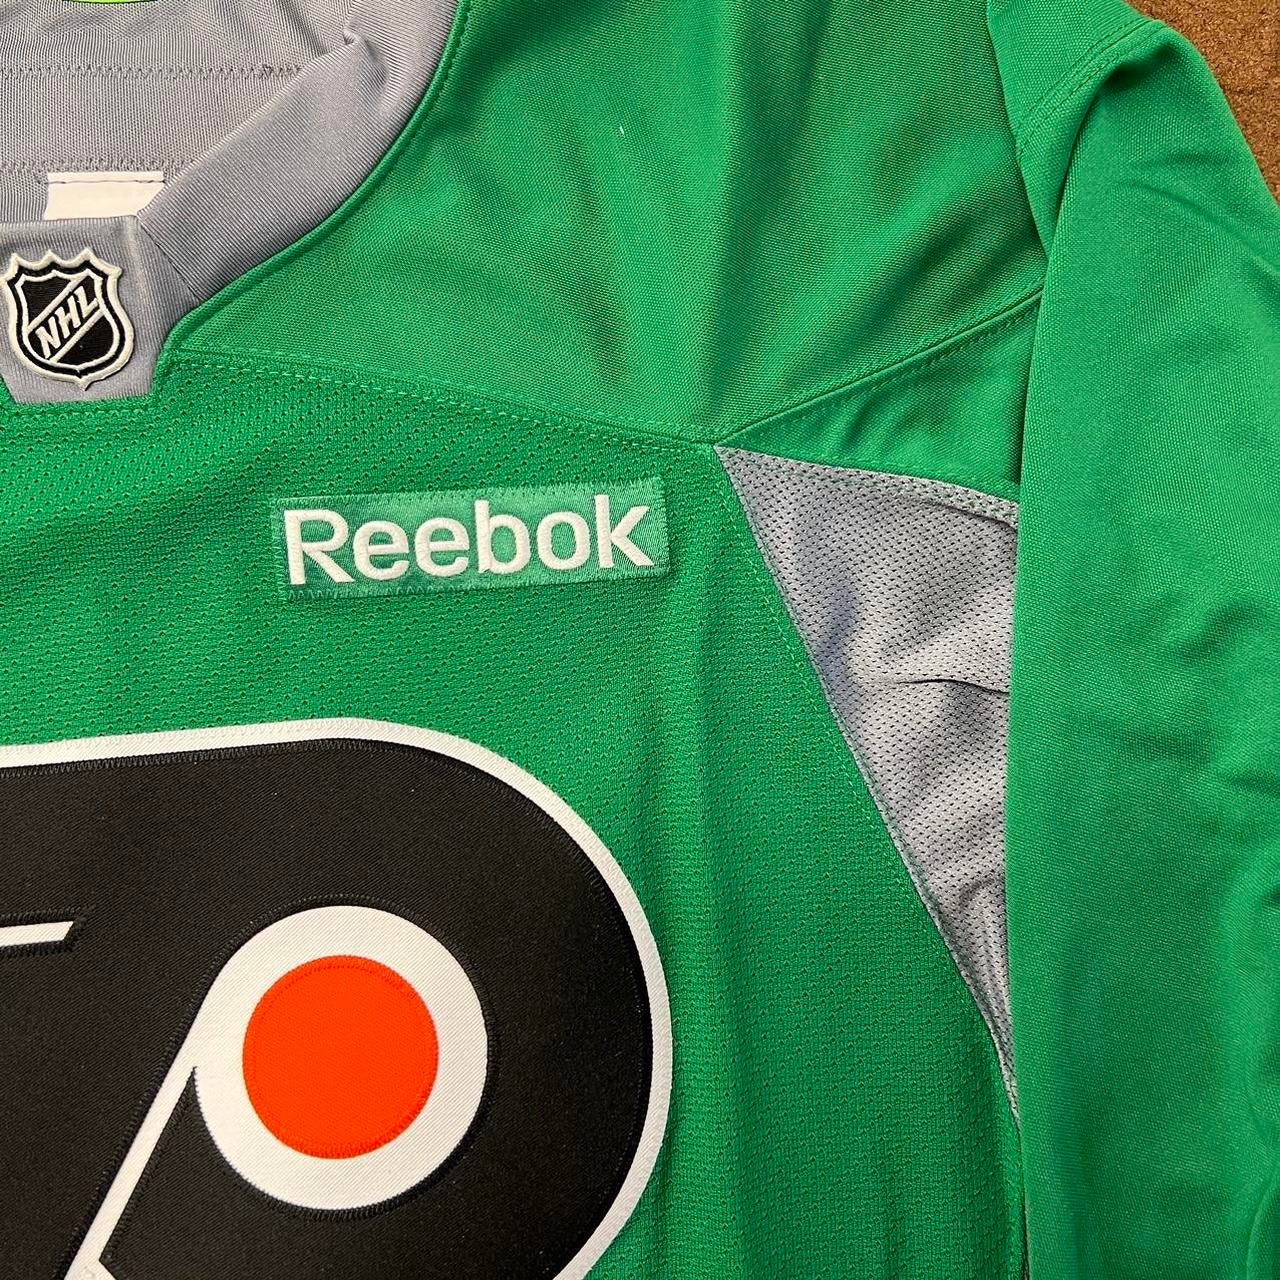 Philadelphia Flyers 2007-2017 Authentic Reebok Warmup/Practice Orange  Hockey Jersey